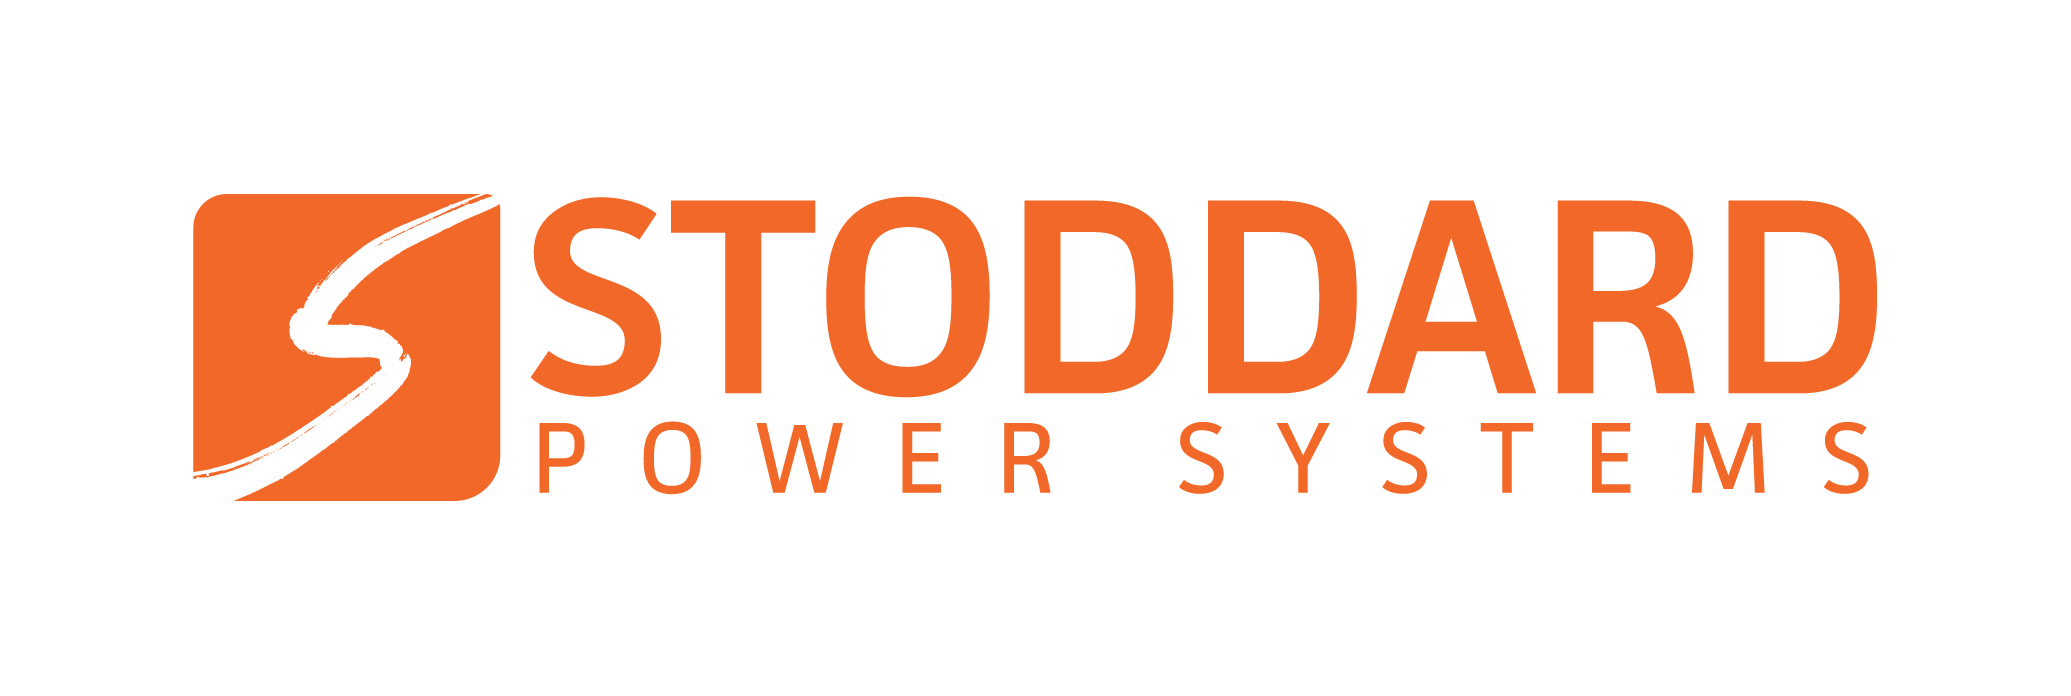 Stoddard Power Systems